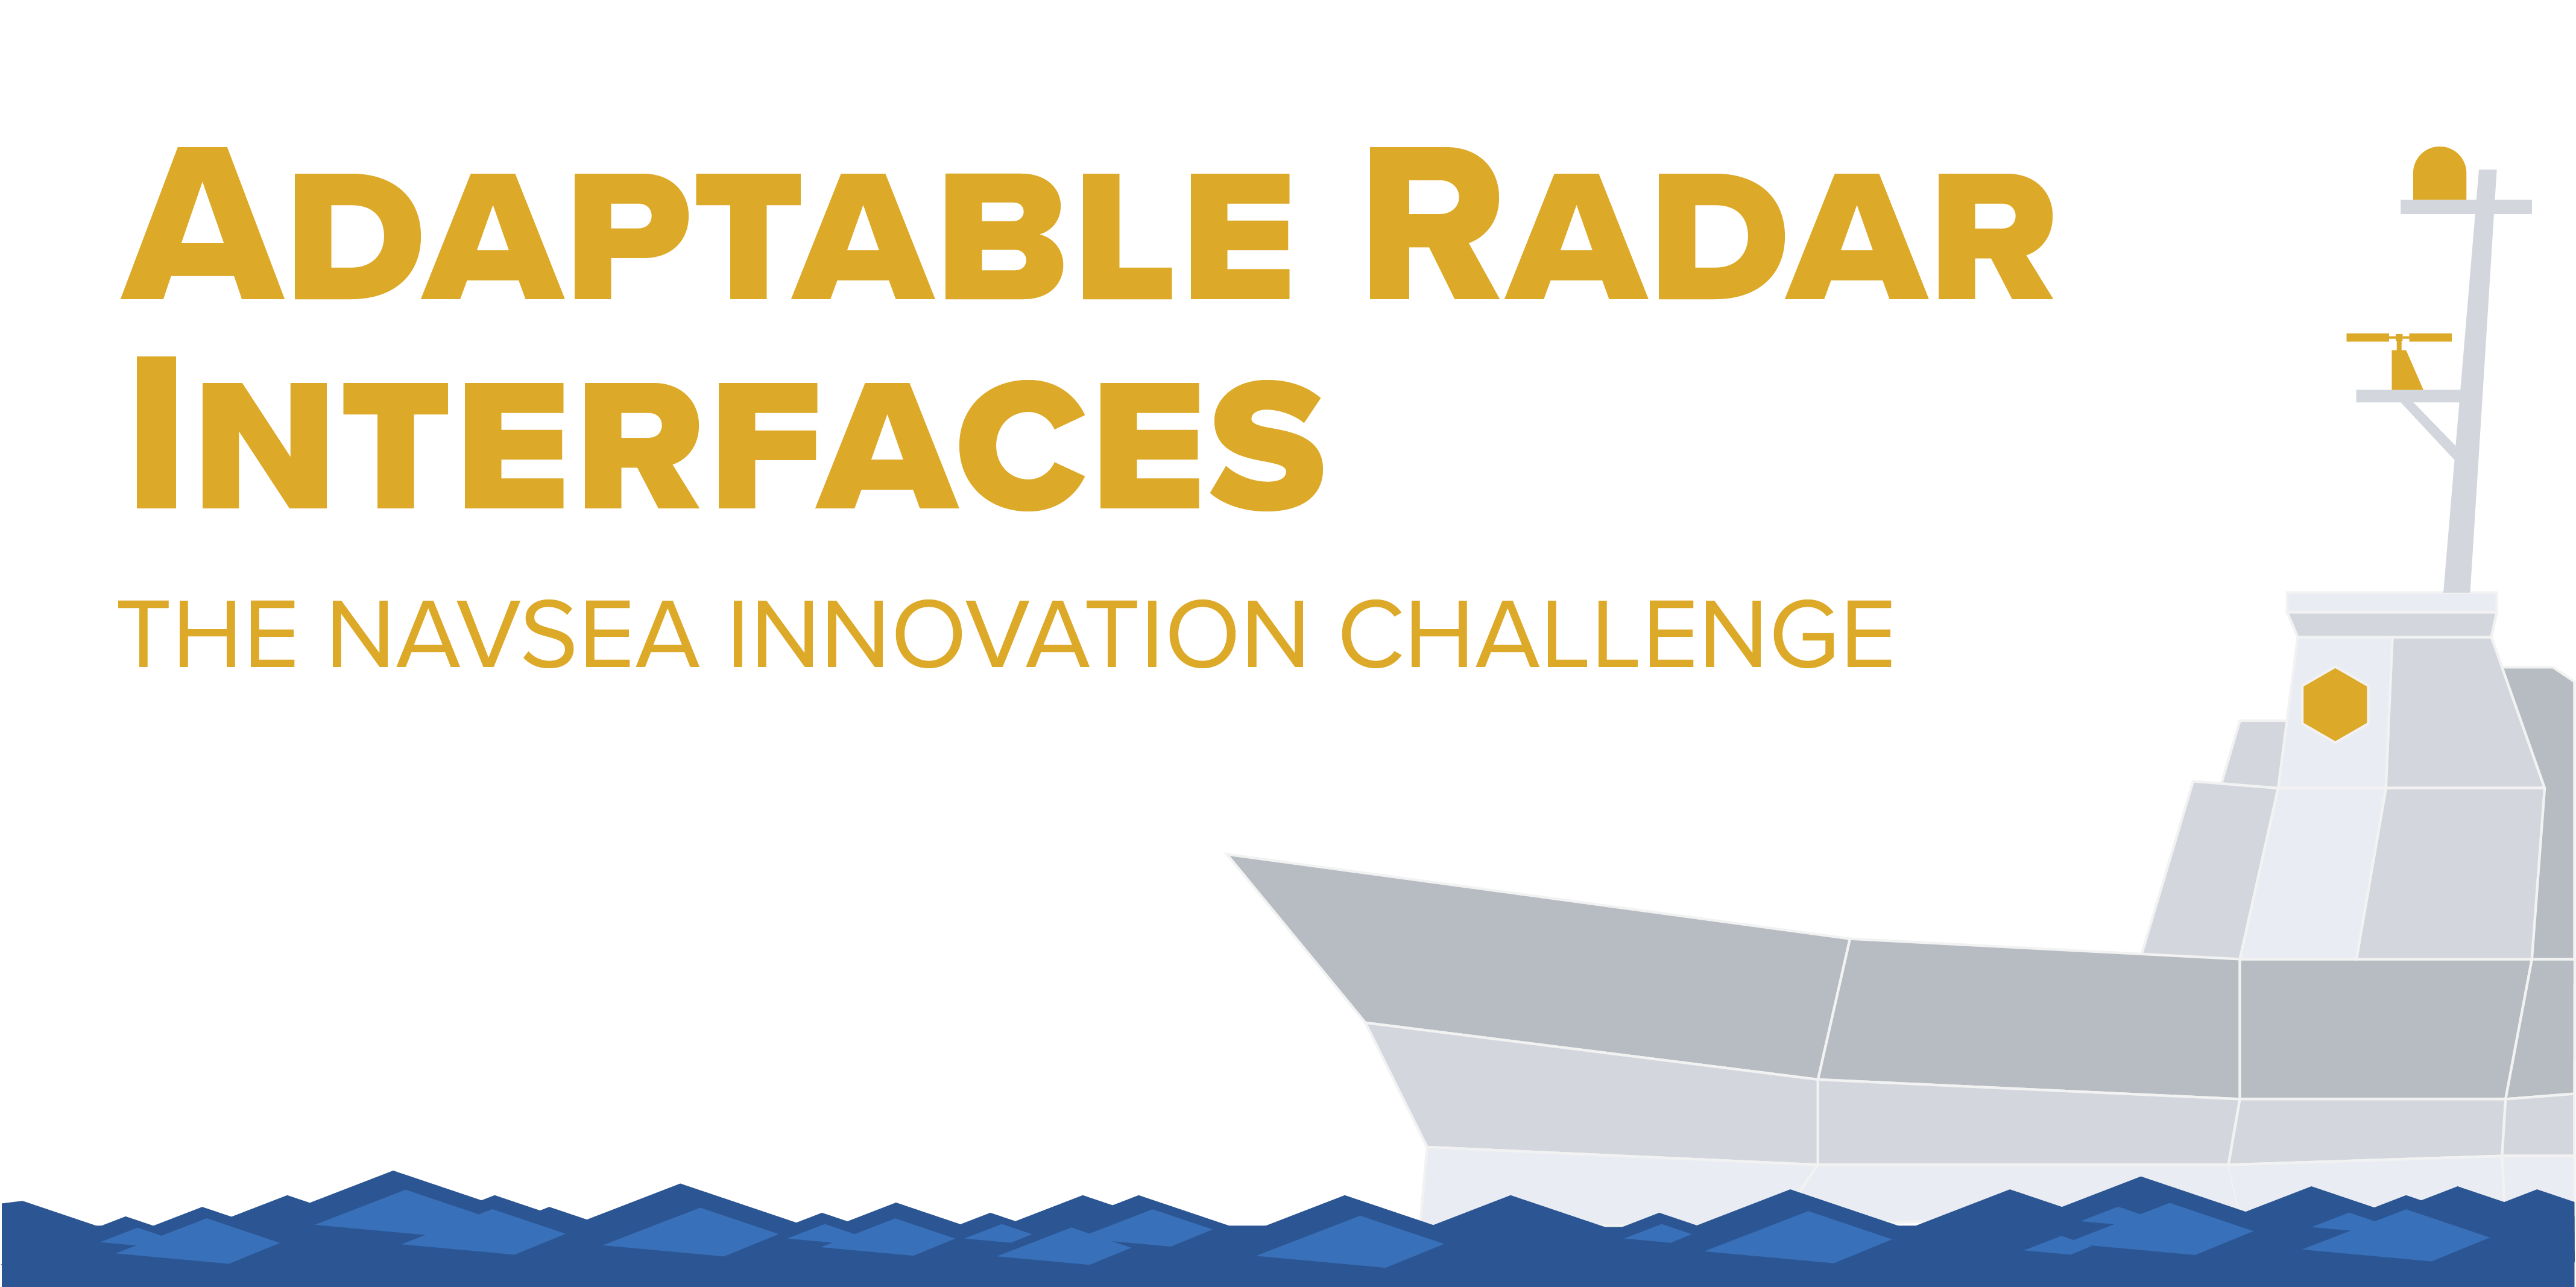 Tangram Flex creates adaptable radar interfaces for Navy Innovation Challenge